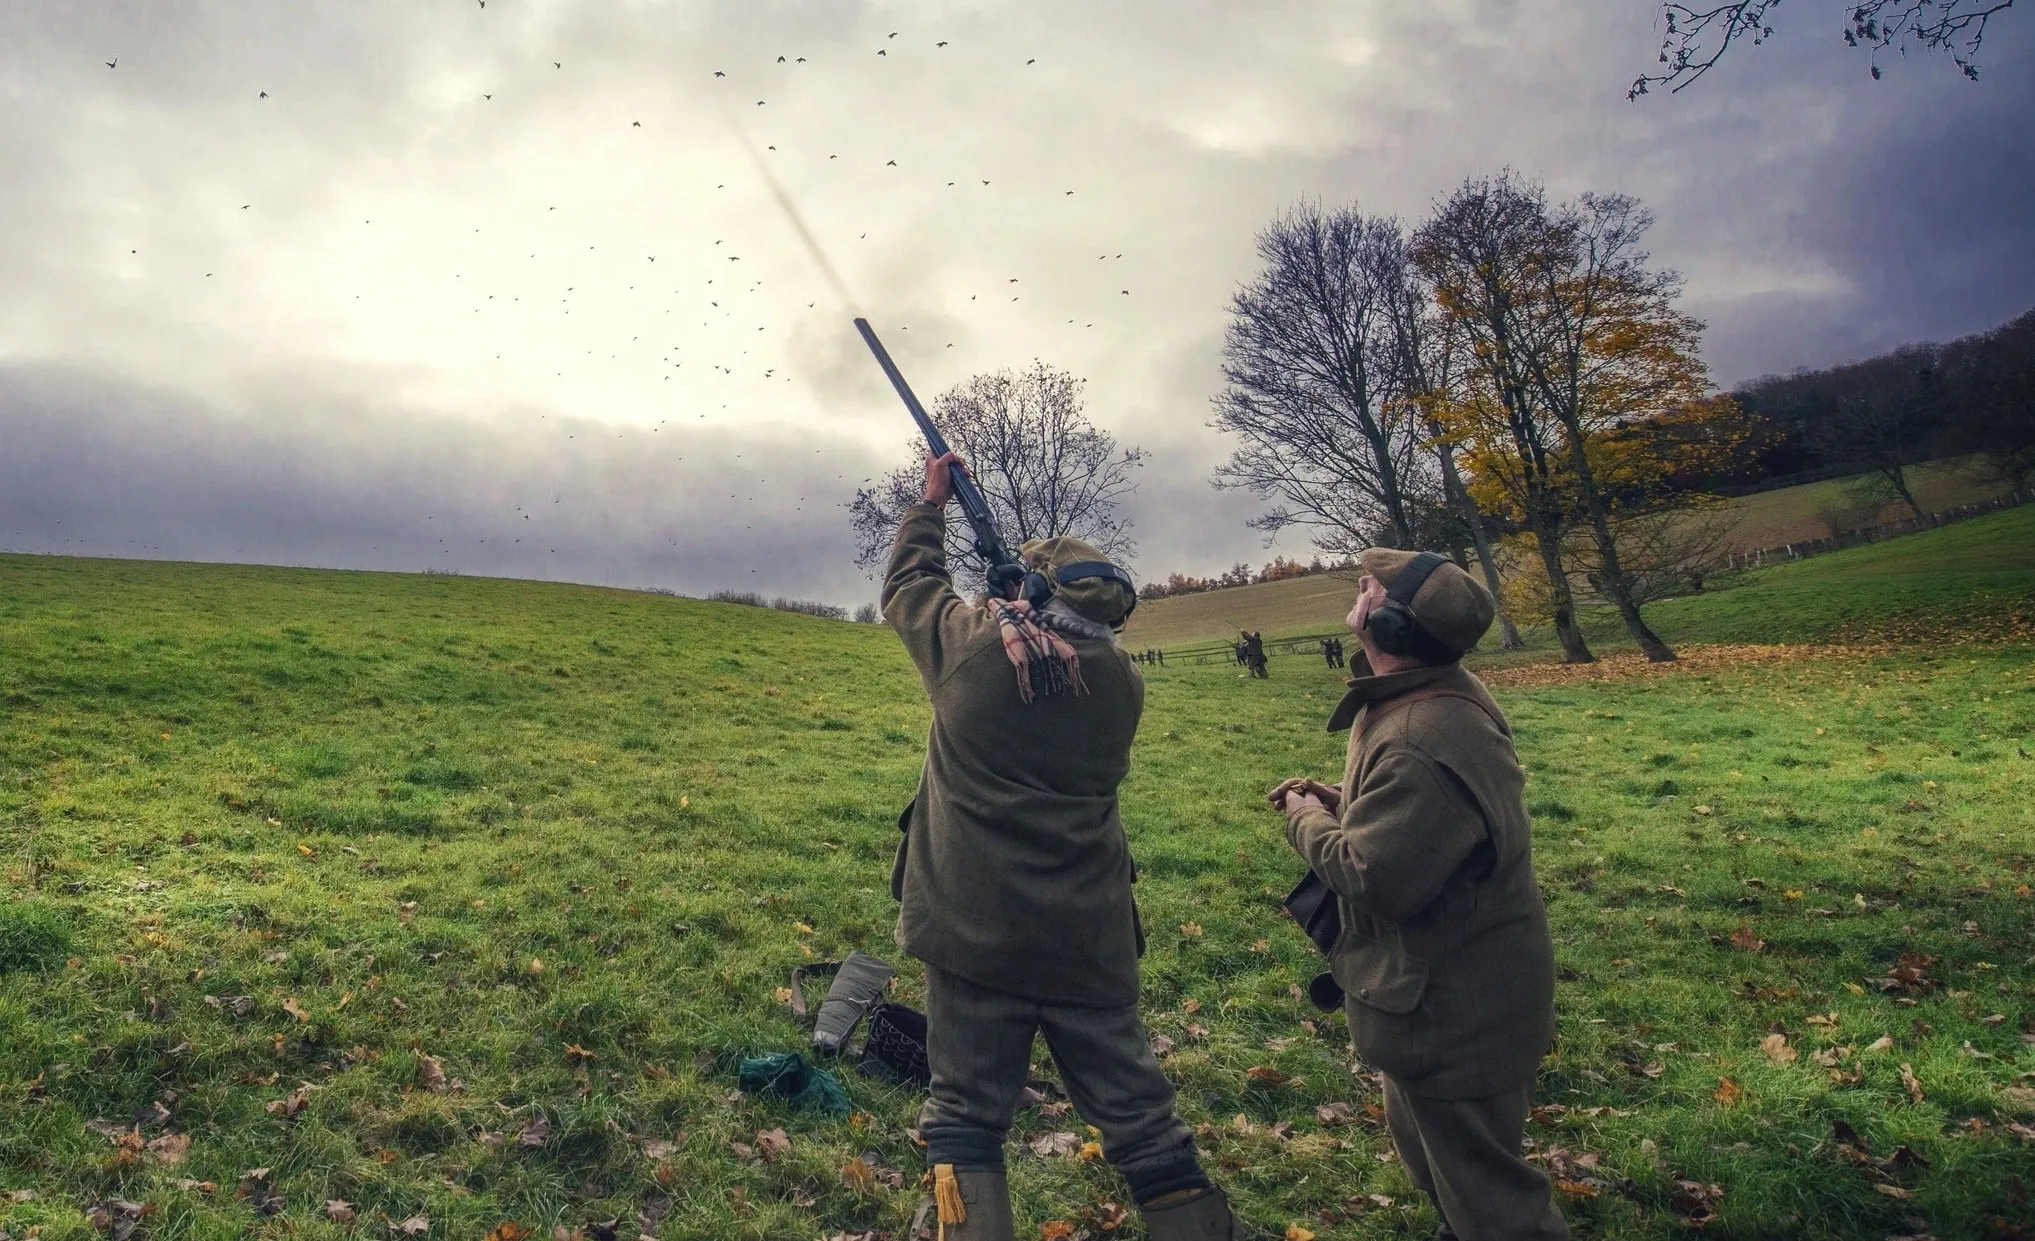 Bisley Clay Pigeon Shooting Ground in Surrey in United Kingdom, Europe | Gun Shooting Sports - Rated 1.3